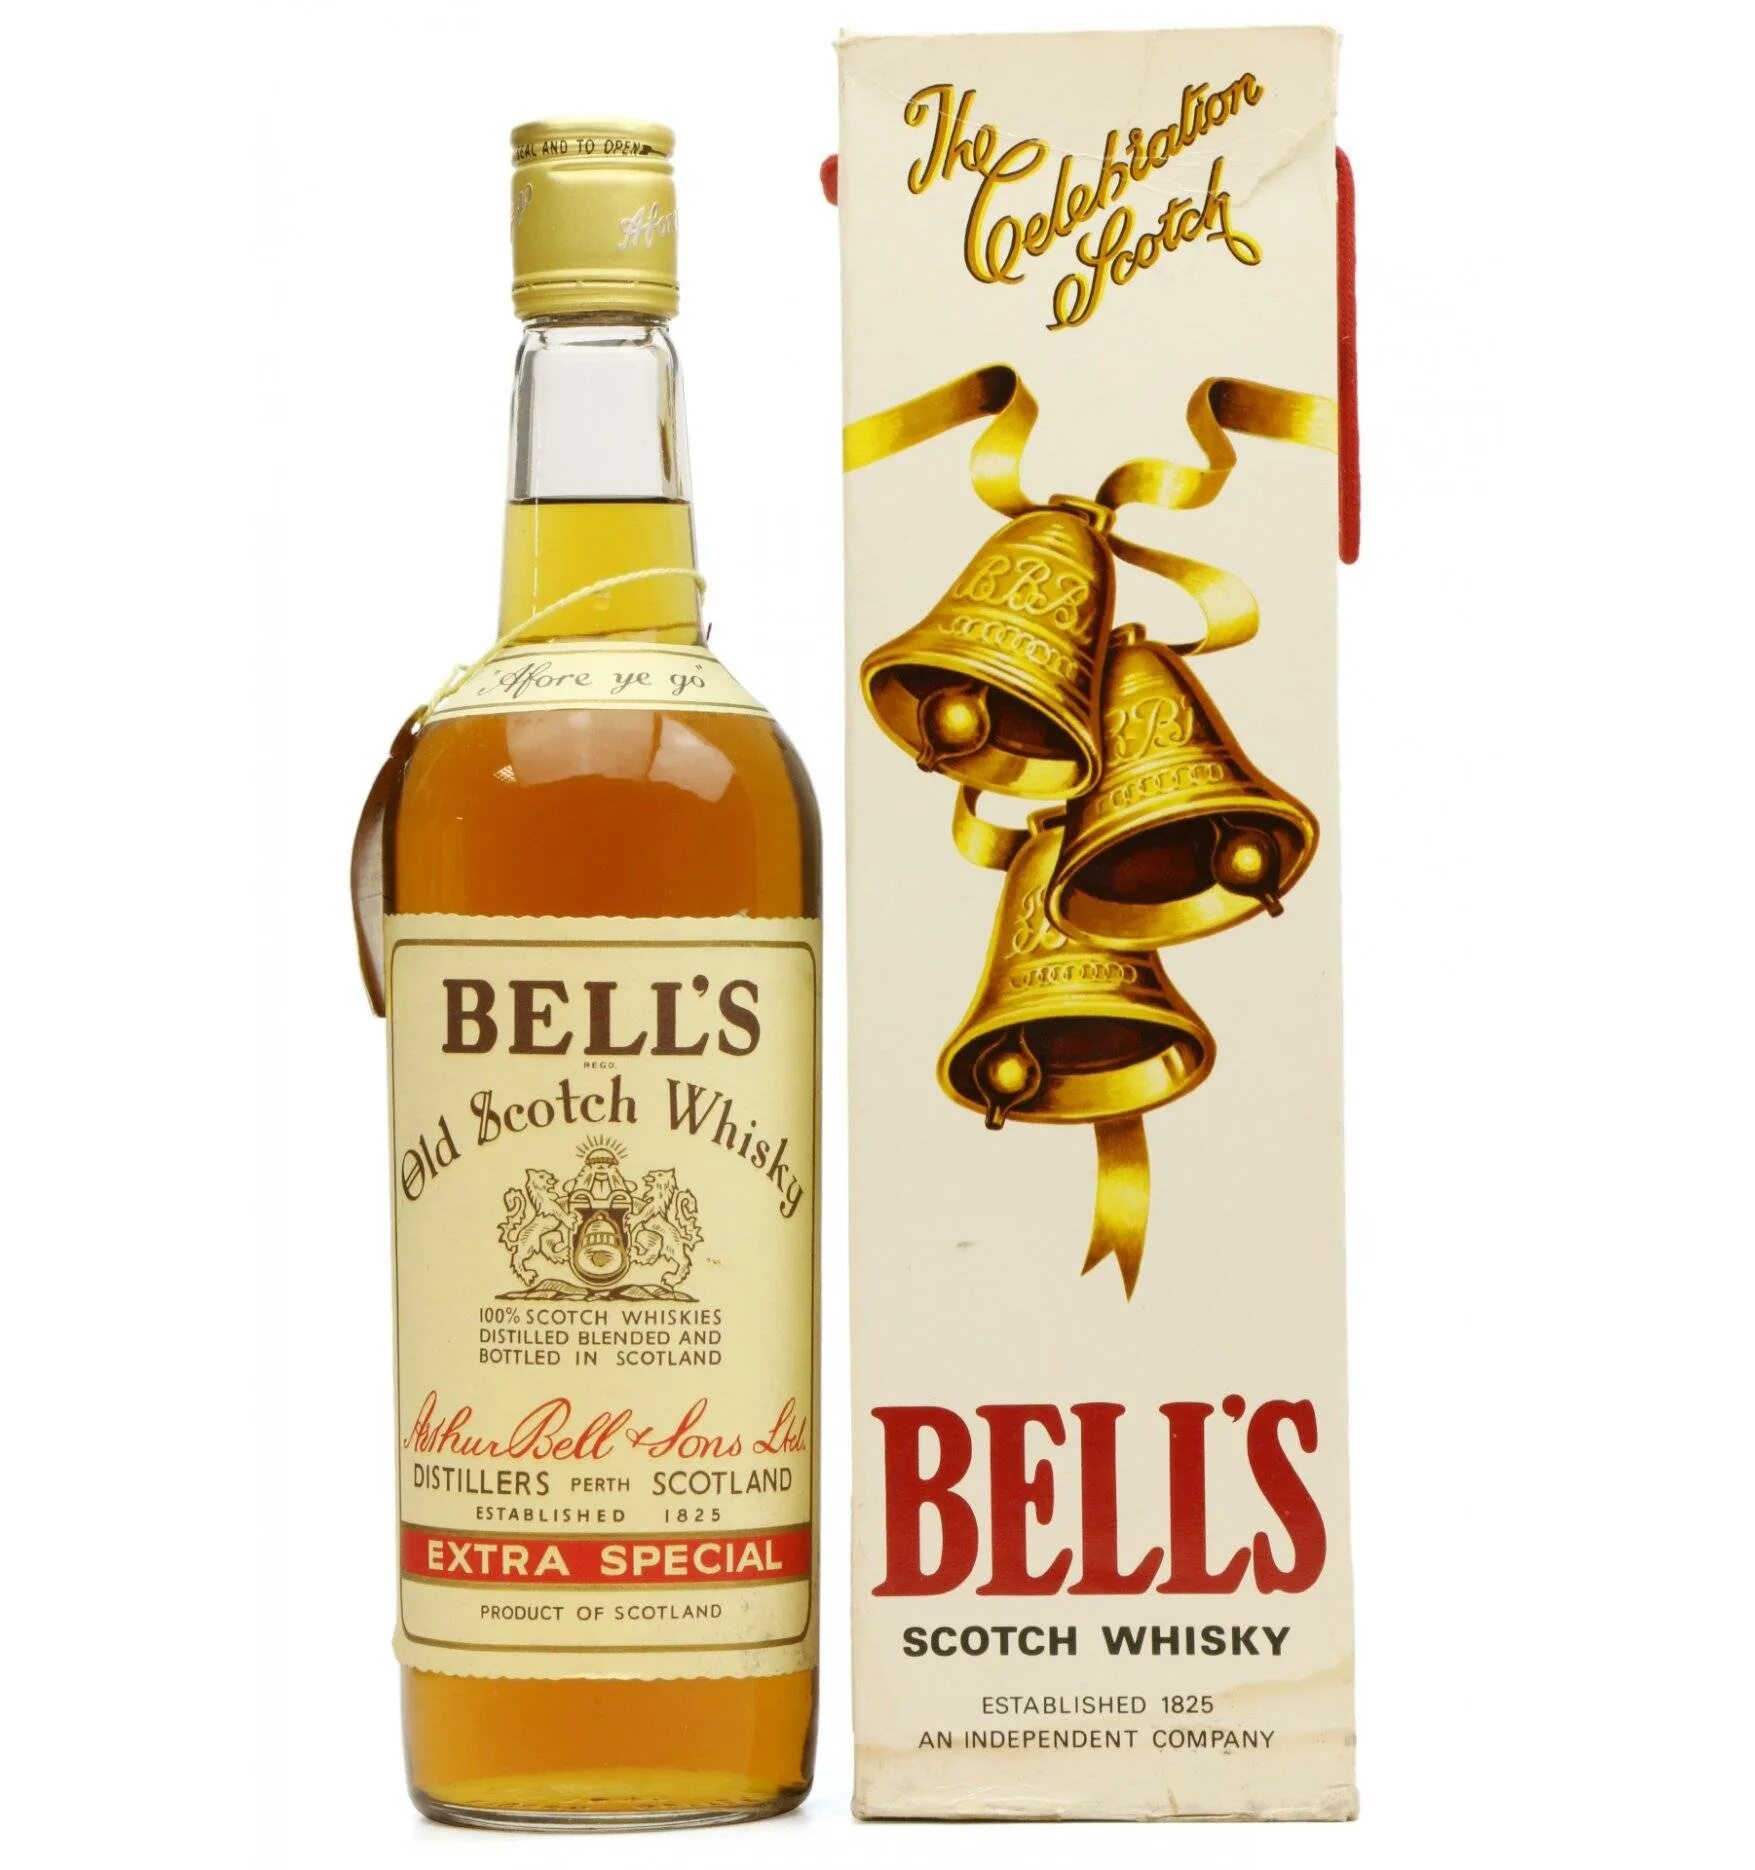 Arthur Bell виски. Виски "Bell's", 0.7 л. Скотч Bells. Bells виски 1 литр. Bells whisky